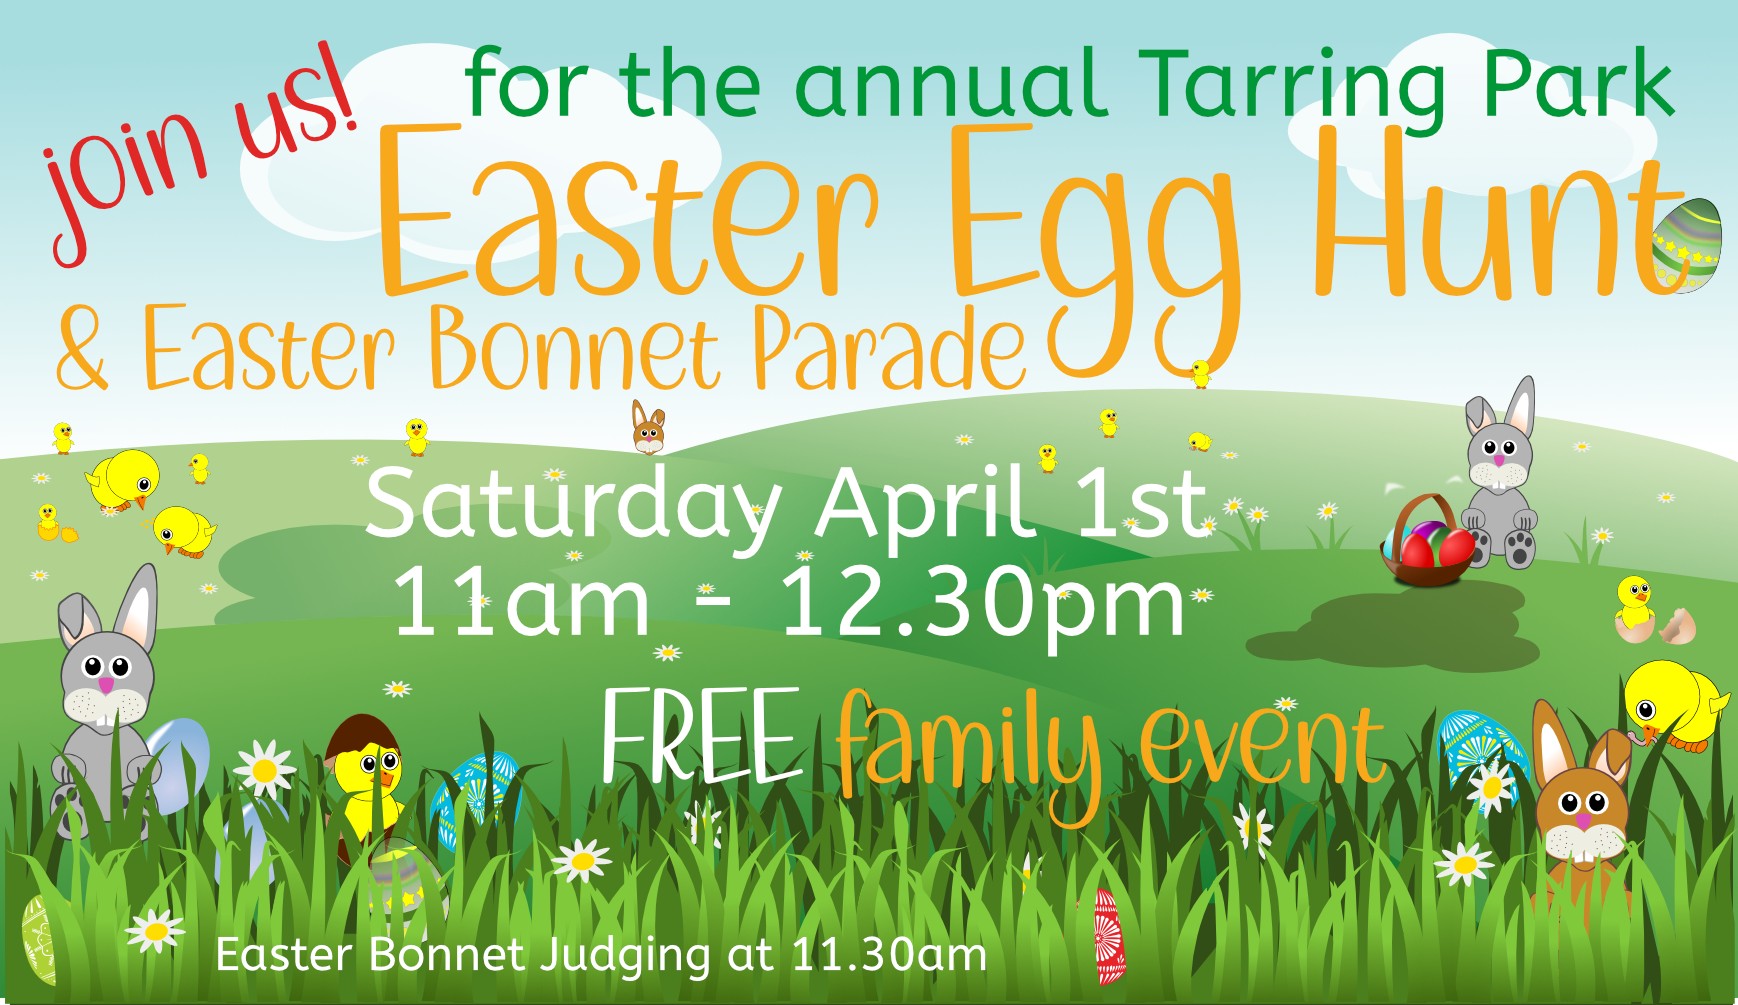 Tarring Park Easter Egg Hunt and Easter Bonnet Parade